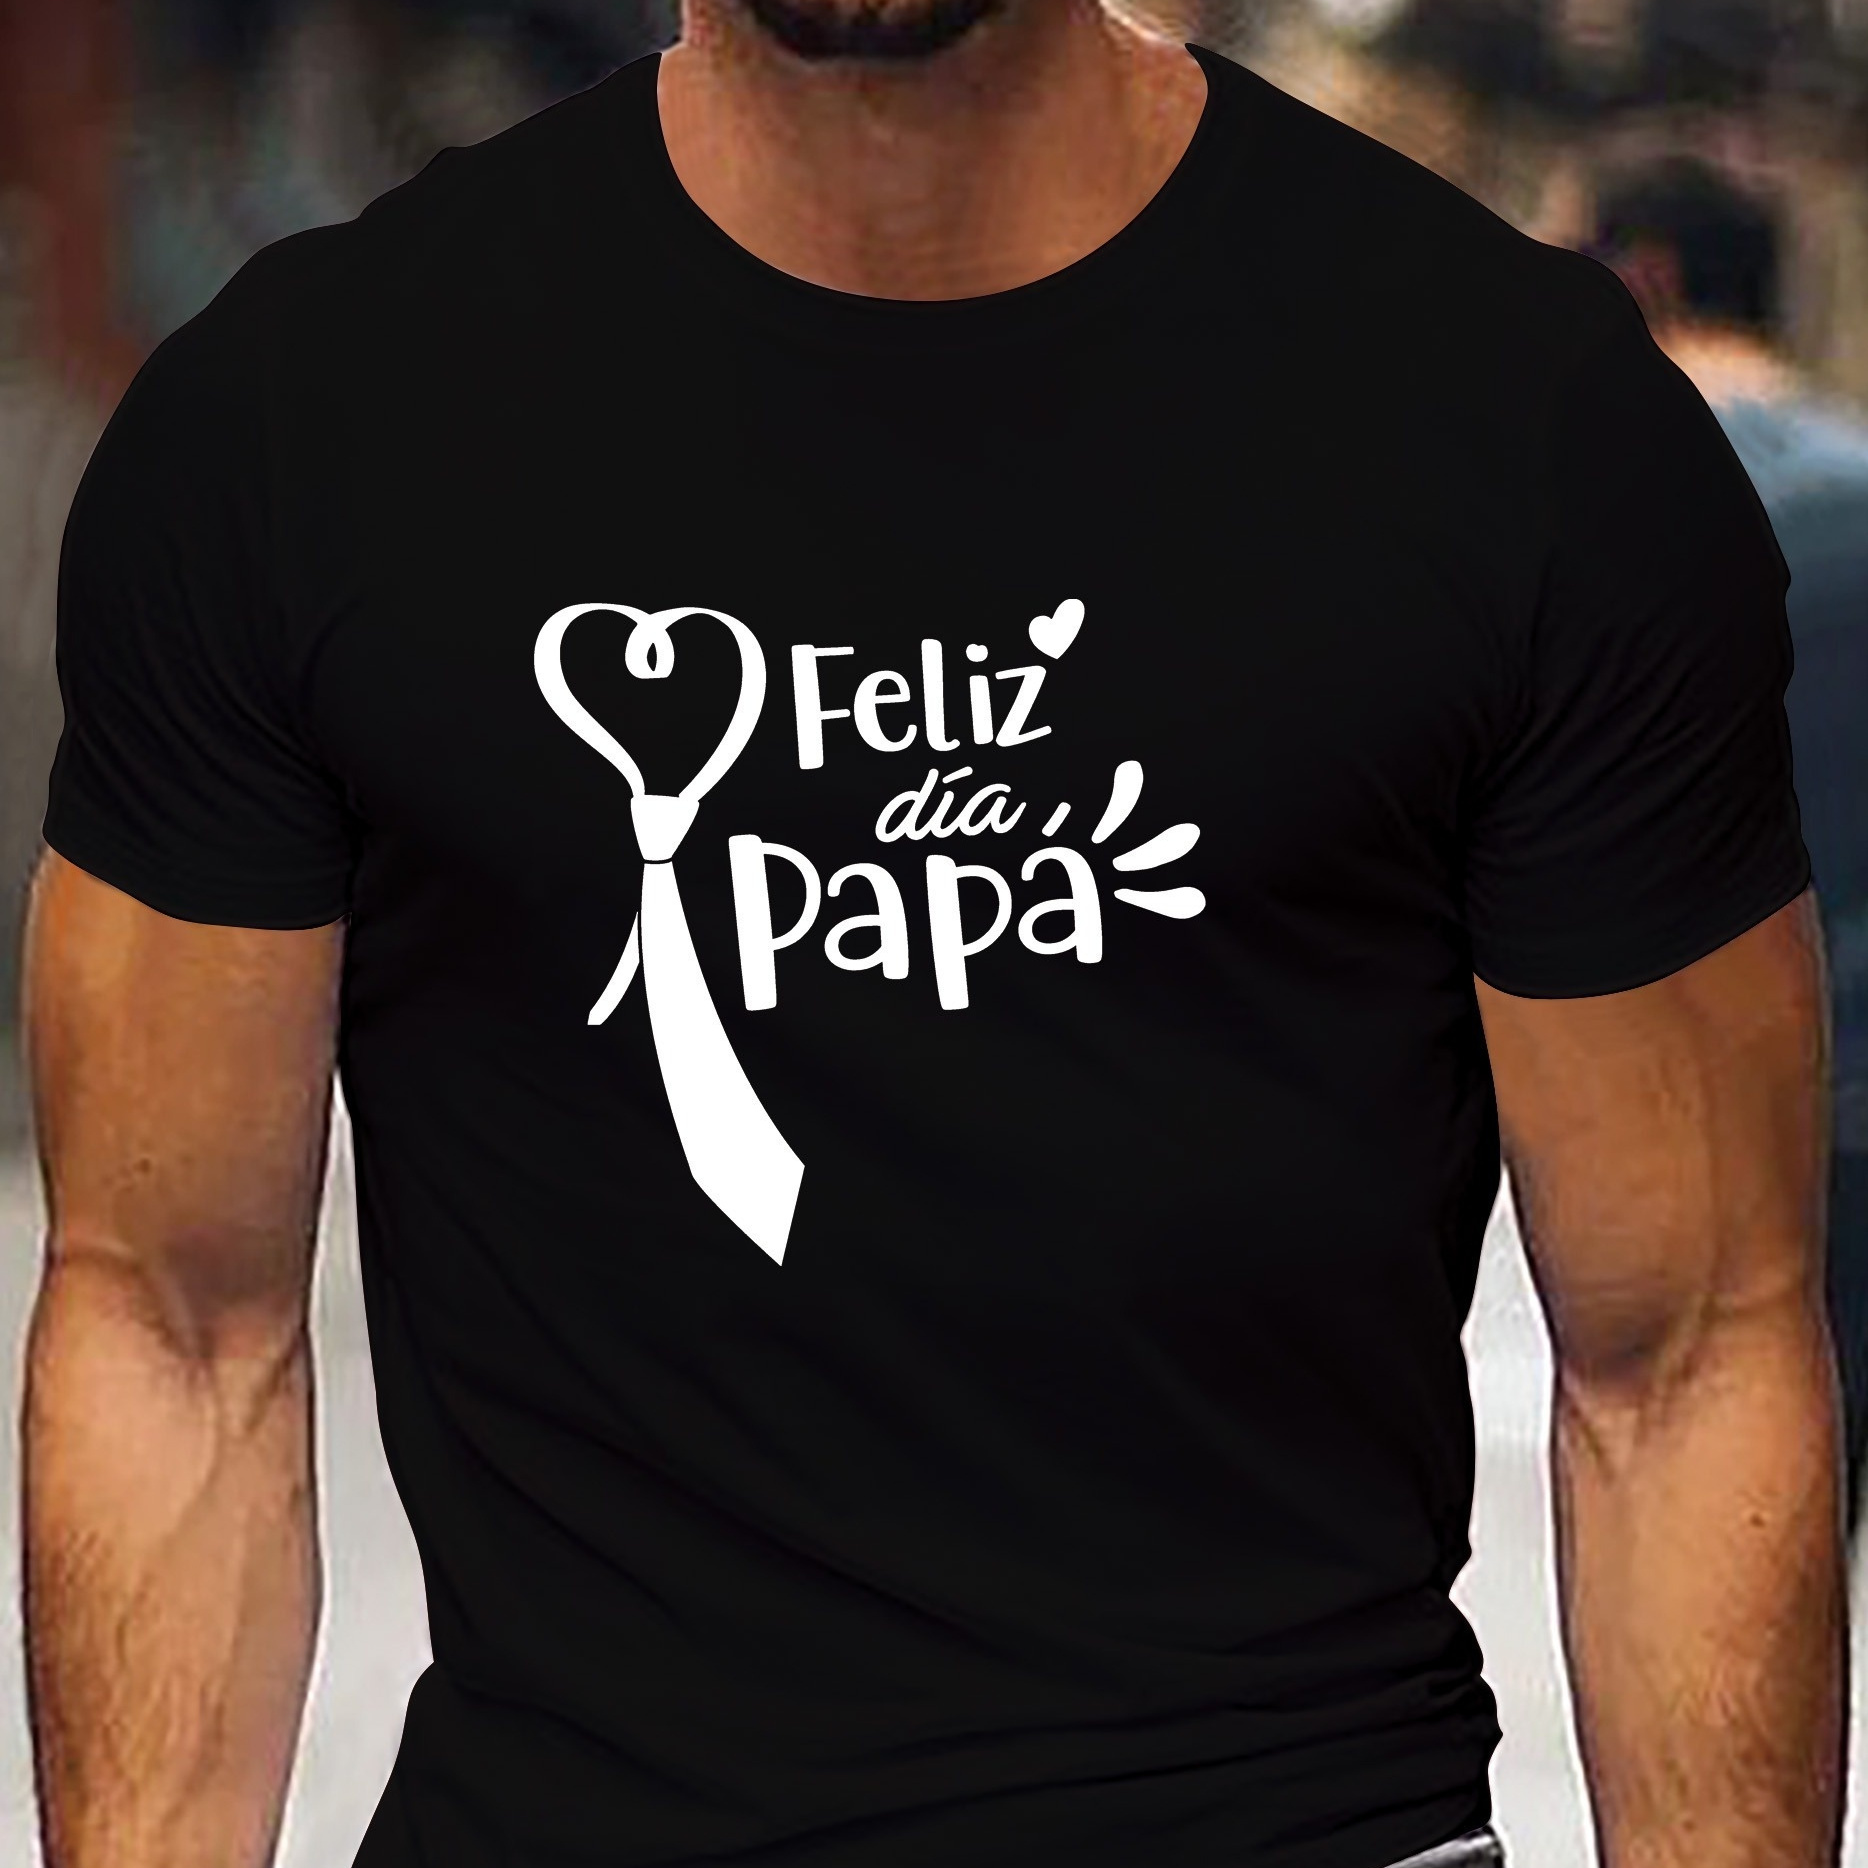 

Feliz Dia Papa Print Tee Shirt, Tees For Men, Casual Short Sleeve T-shirt For Summer